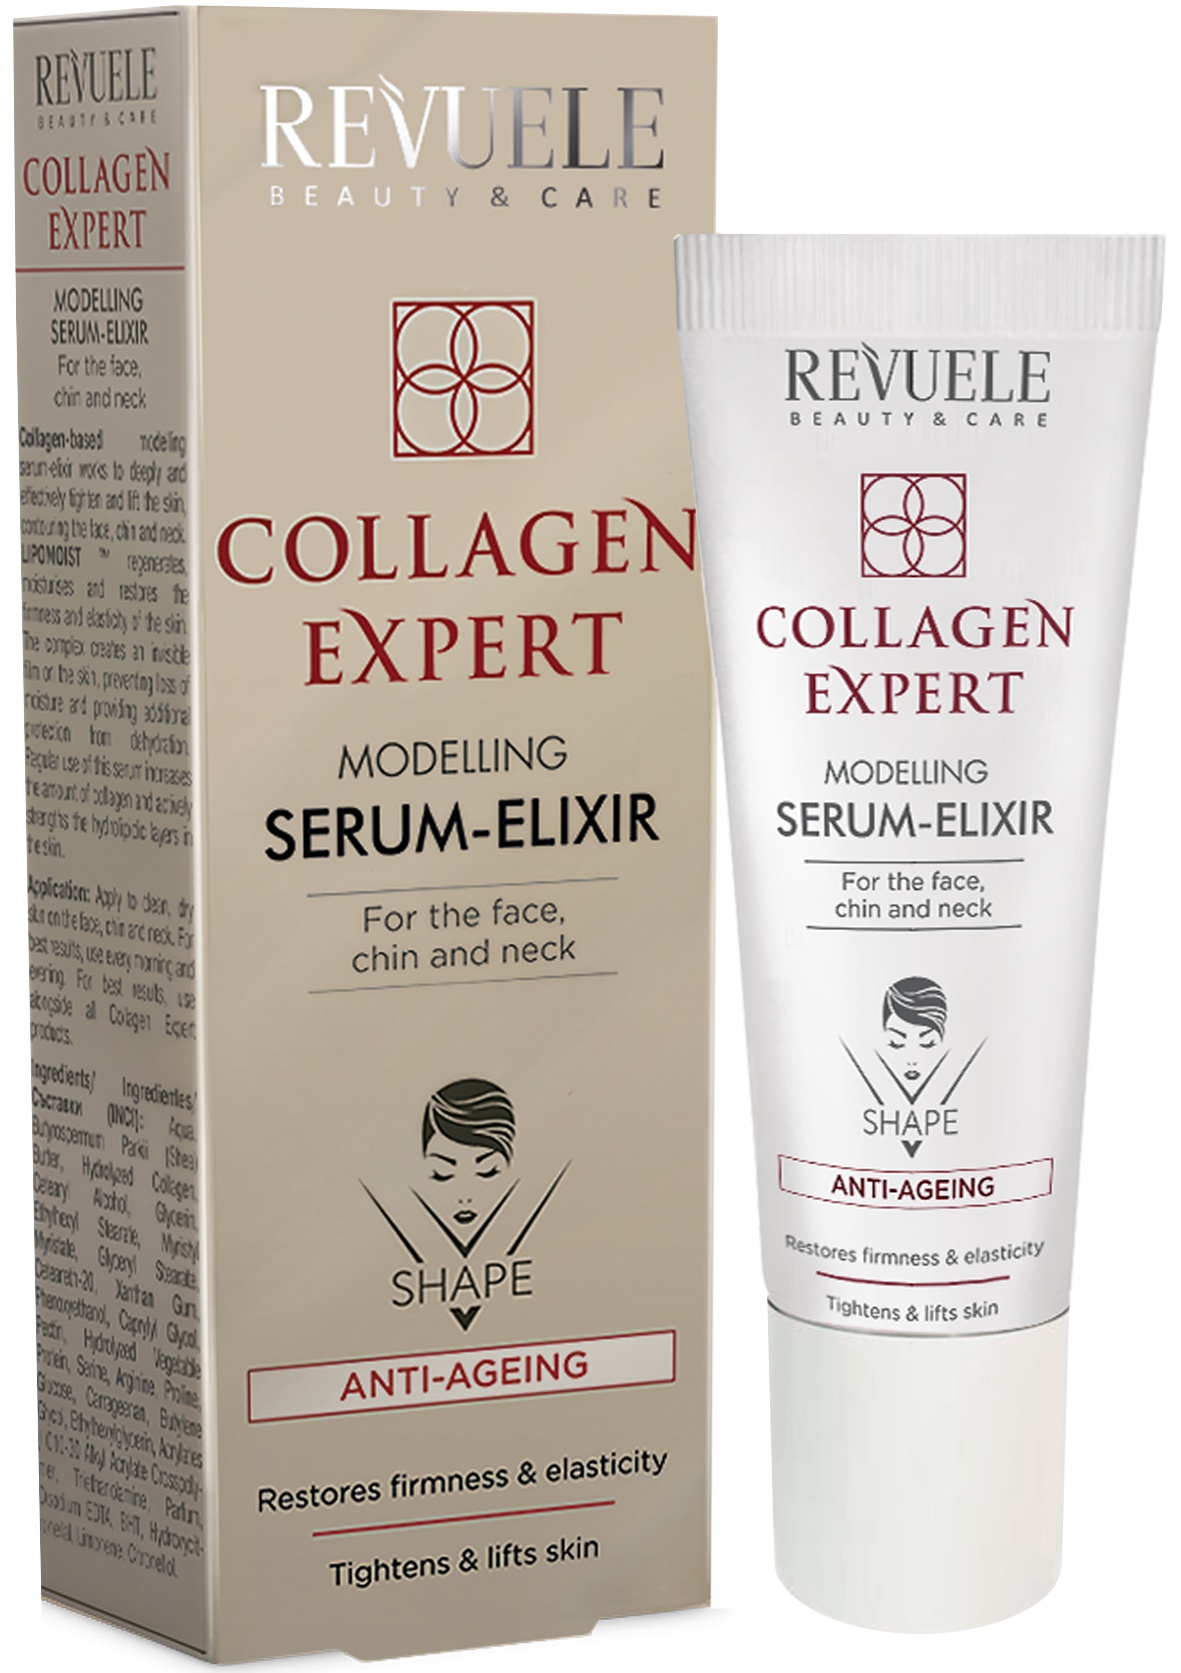 Revuele Collagen Expert Modelling Serum-Elixir